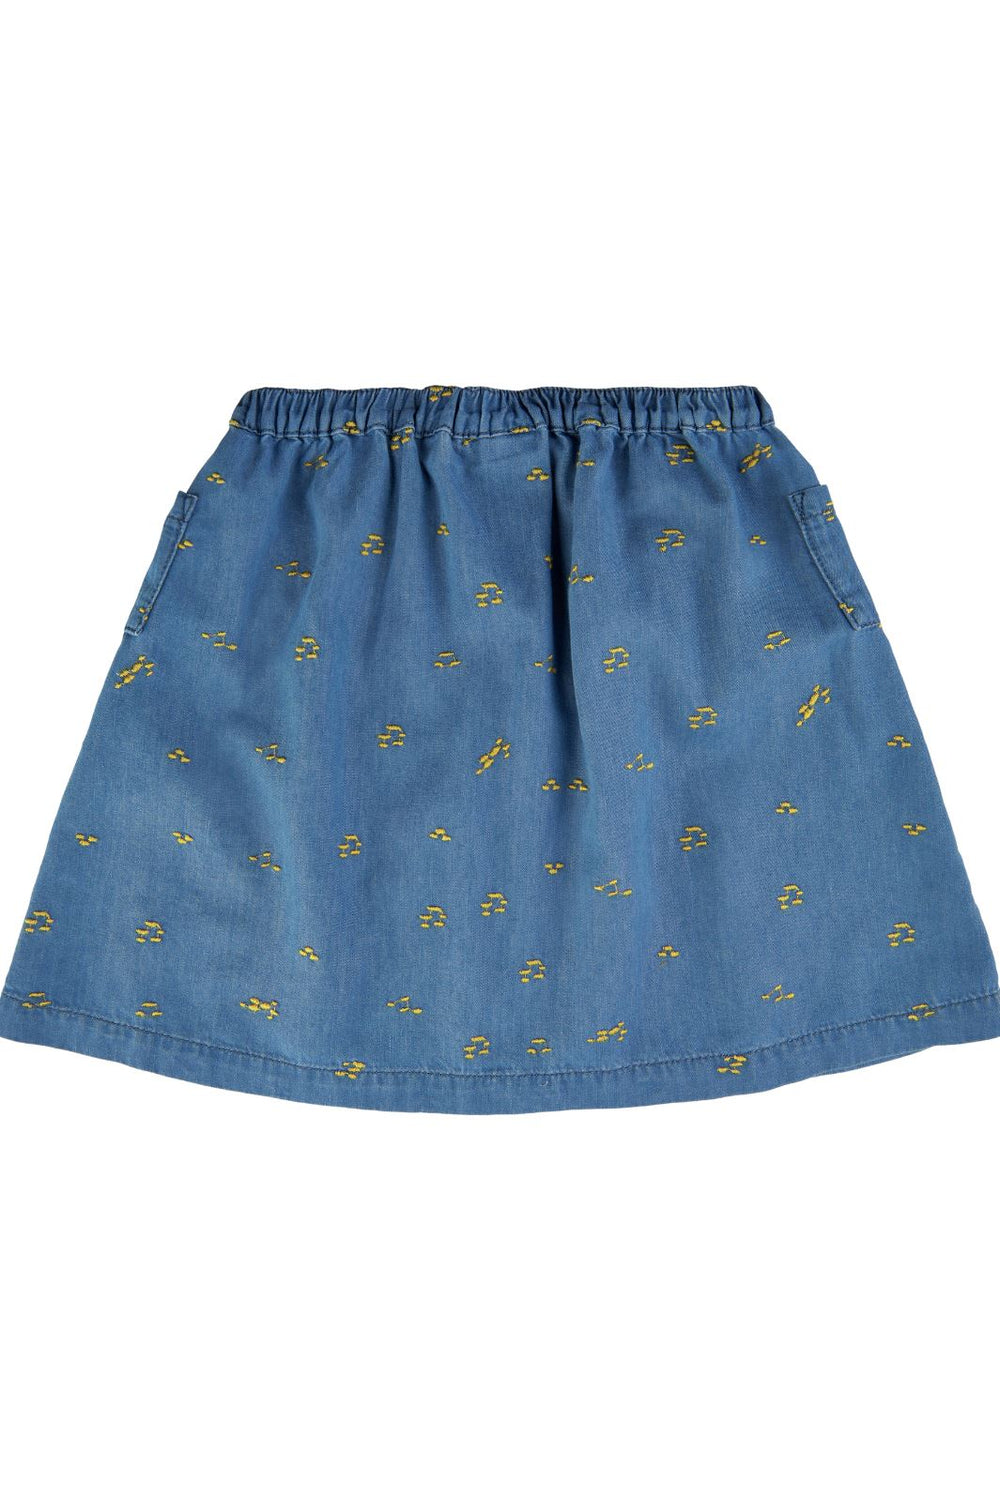 Soft Gallery - SGDizzy Chambray Skirt - BLUE DENIM Bukser 